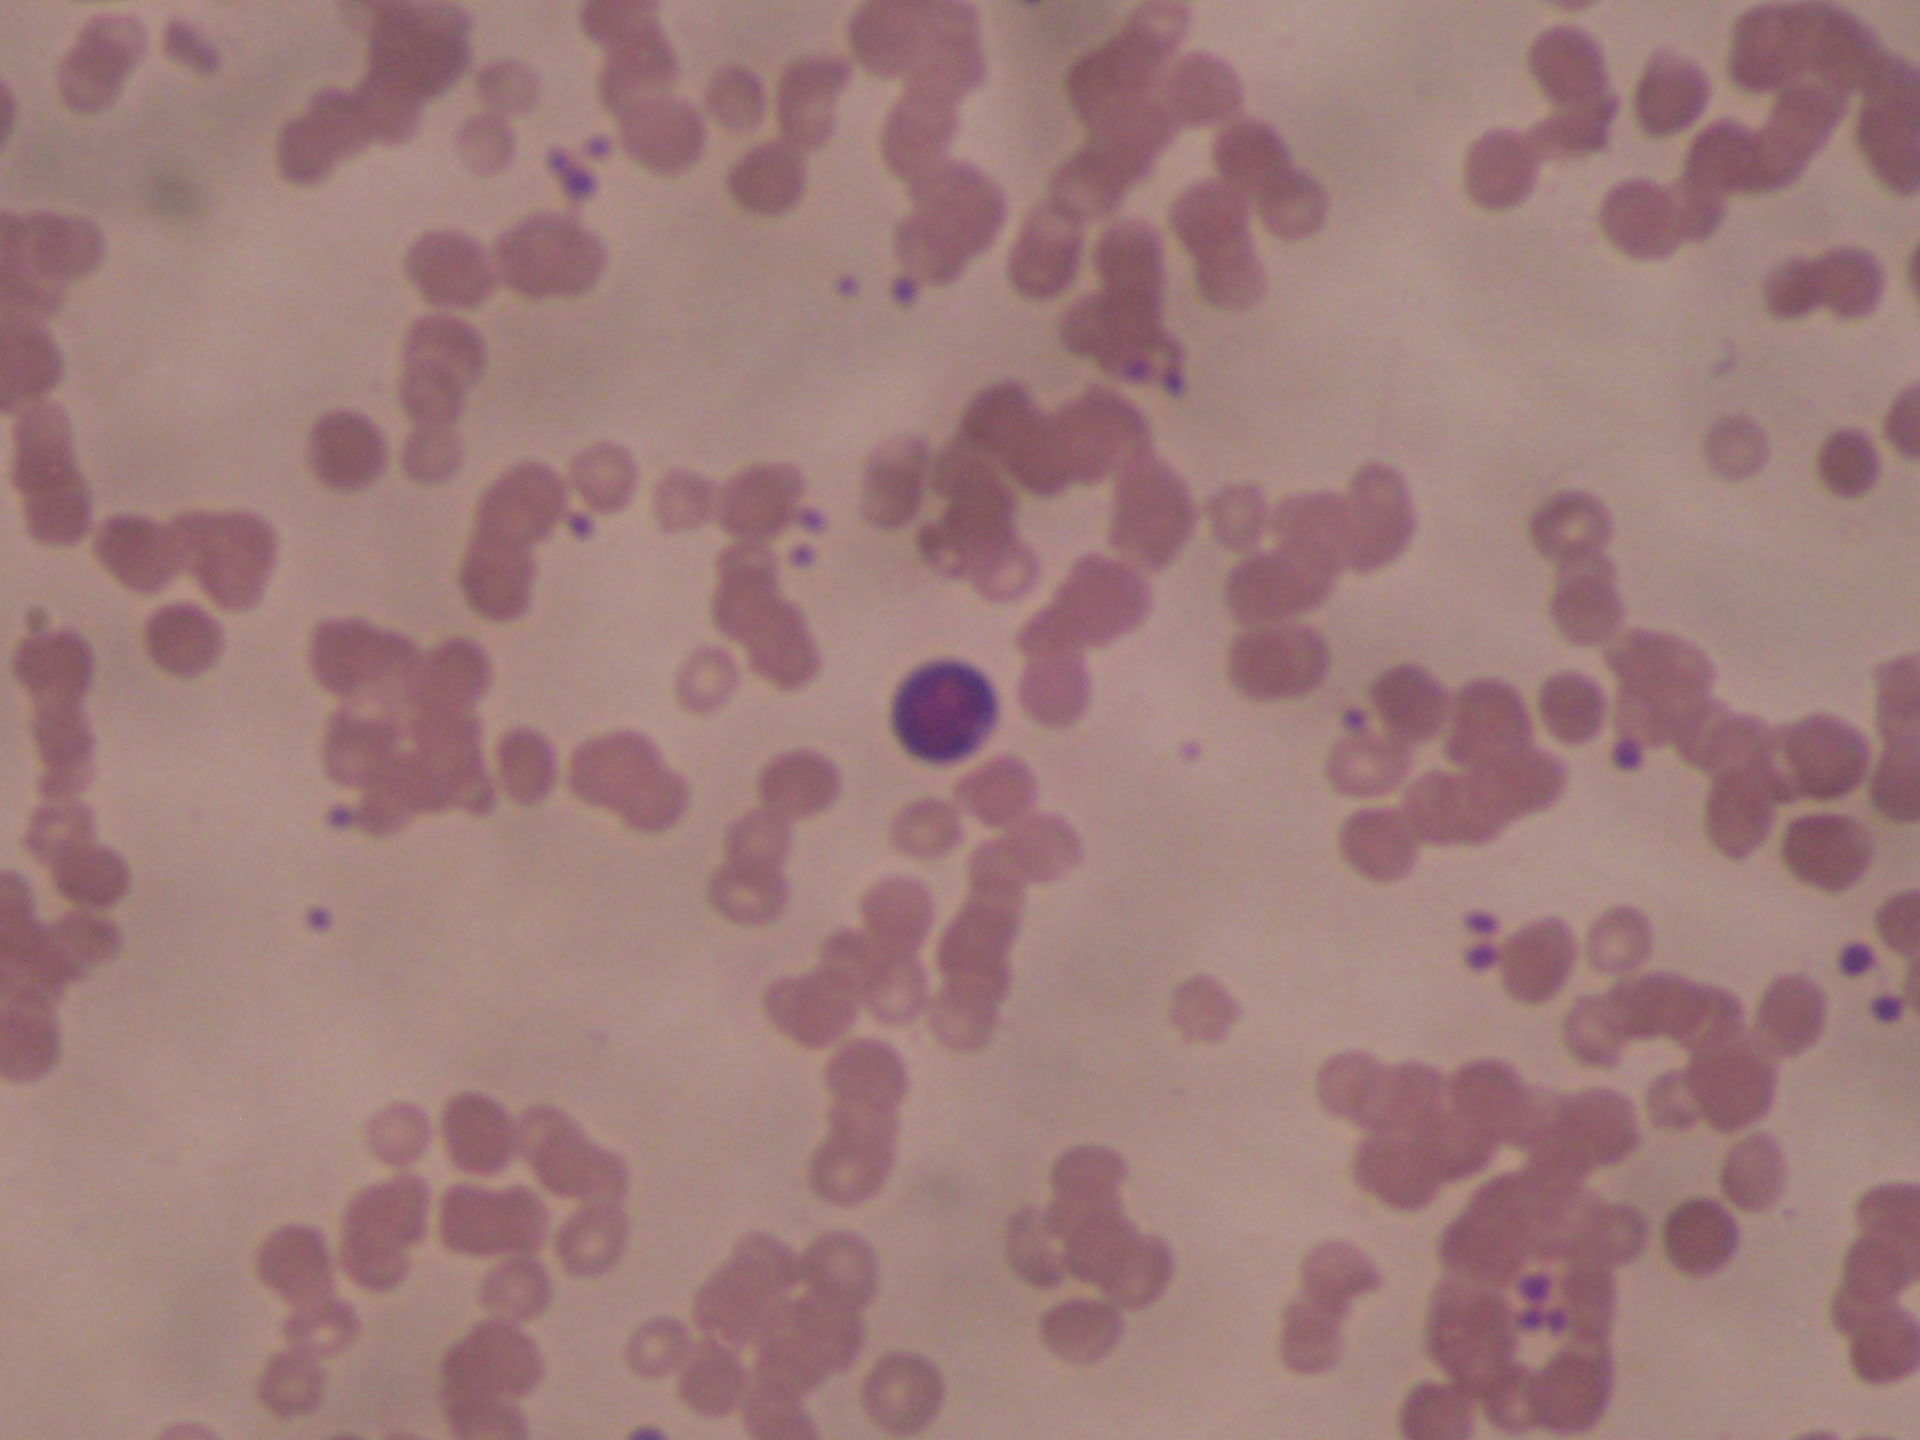 Veterinary medicine: Blood of a horse 4, lymphocytes